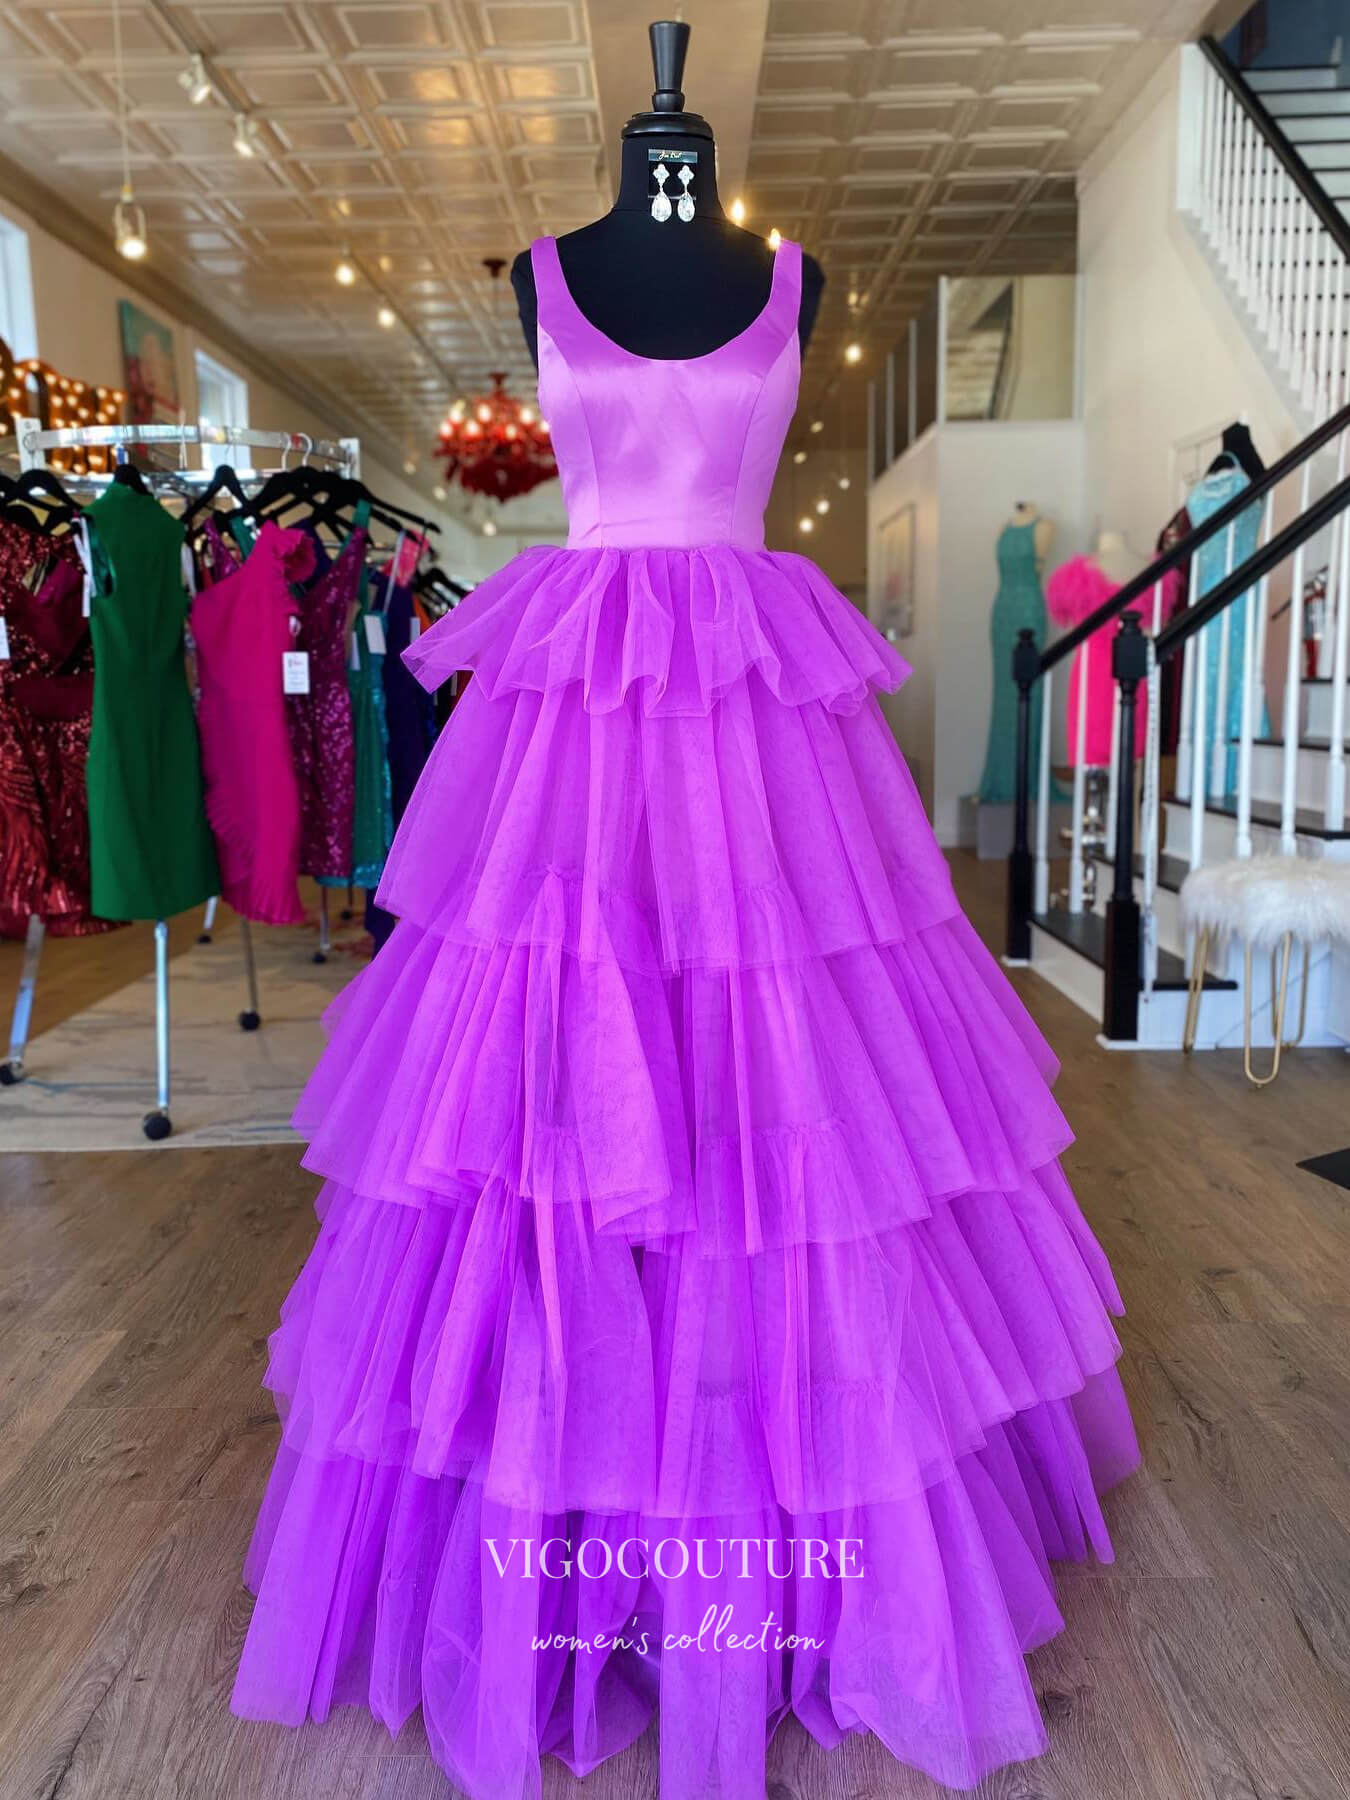 vigocouture-Purple Tulle Layered Ruffle Prom Dresses Scoop Neck Formal Dresses 21559-Prom Dresses-vigocouture-Purple-US2-